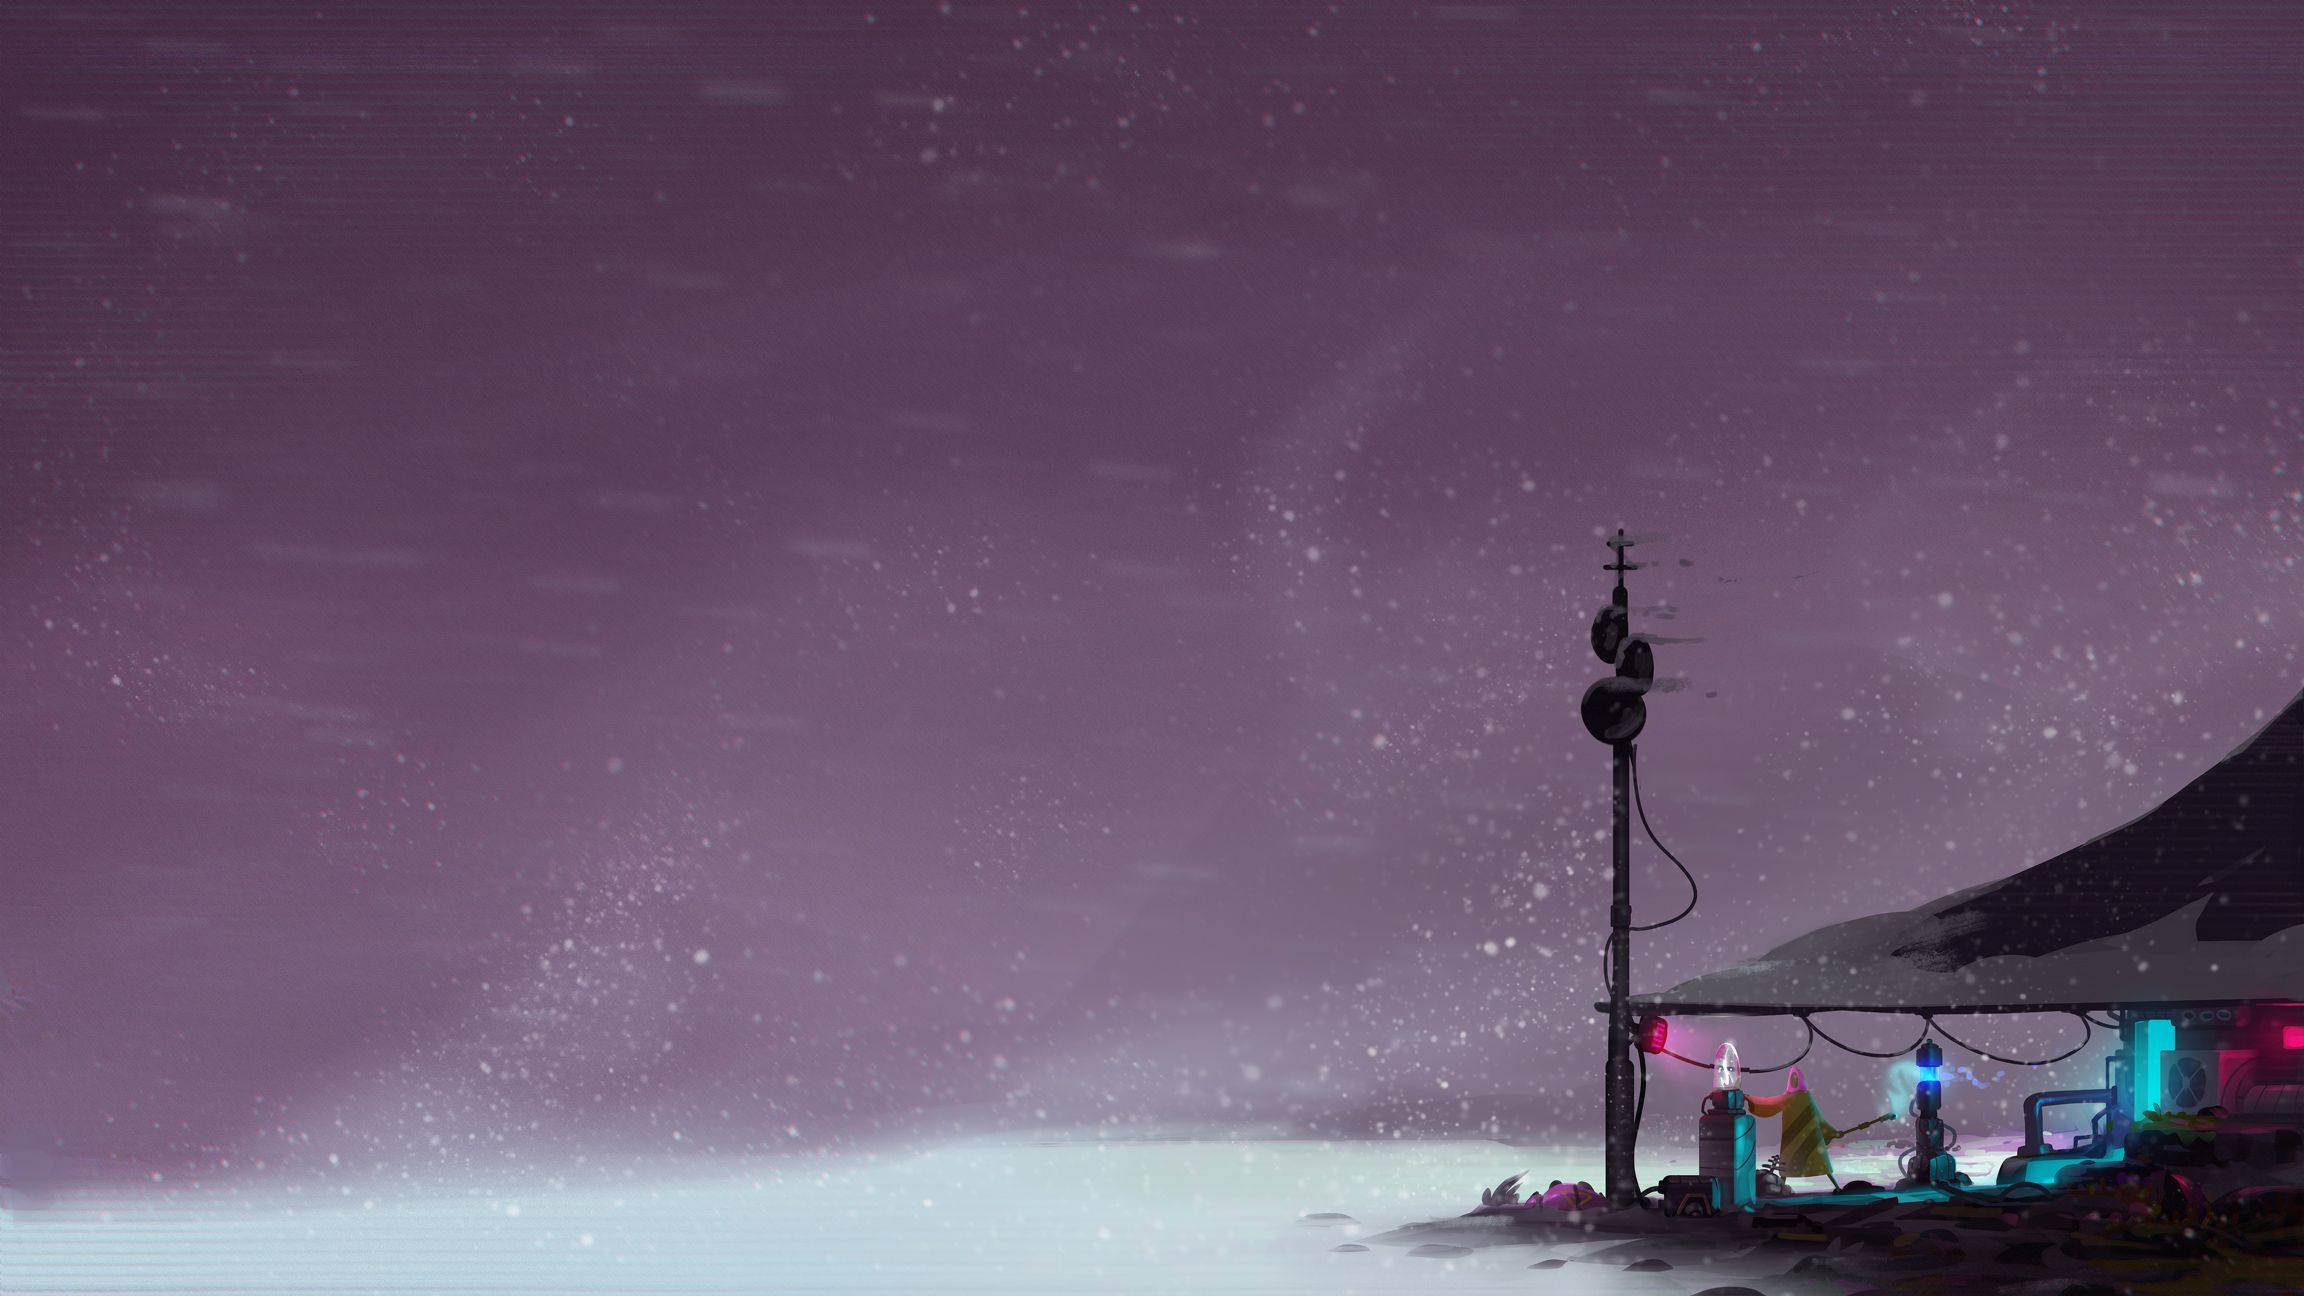 Frozen Climate, HD Artist, 4k Wallpaper, Image, Background